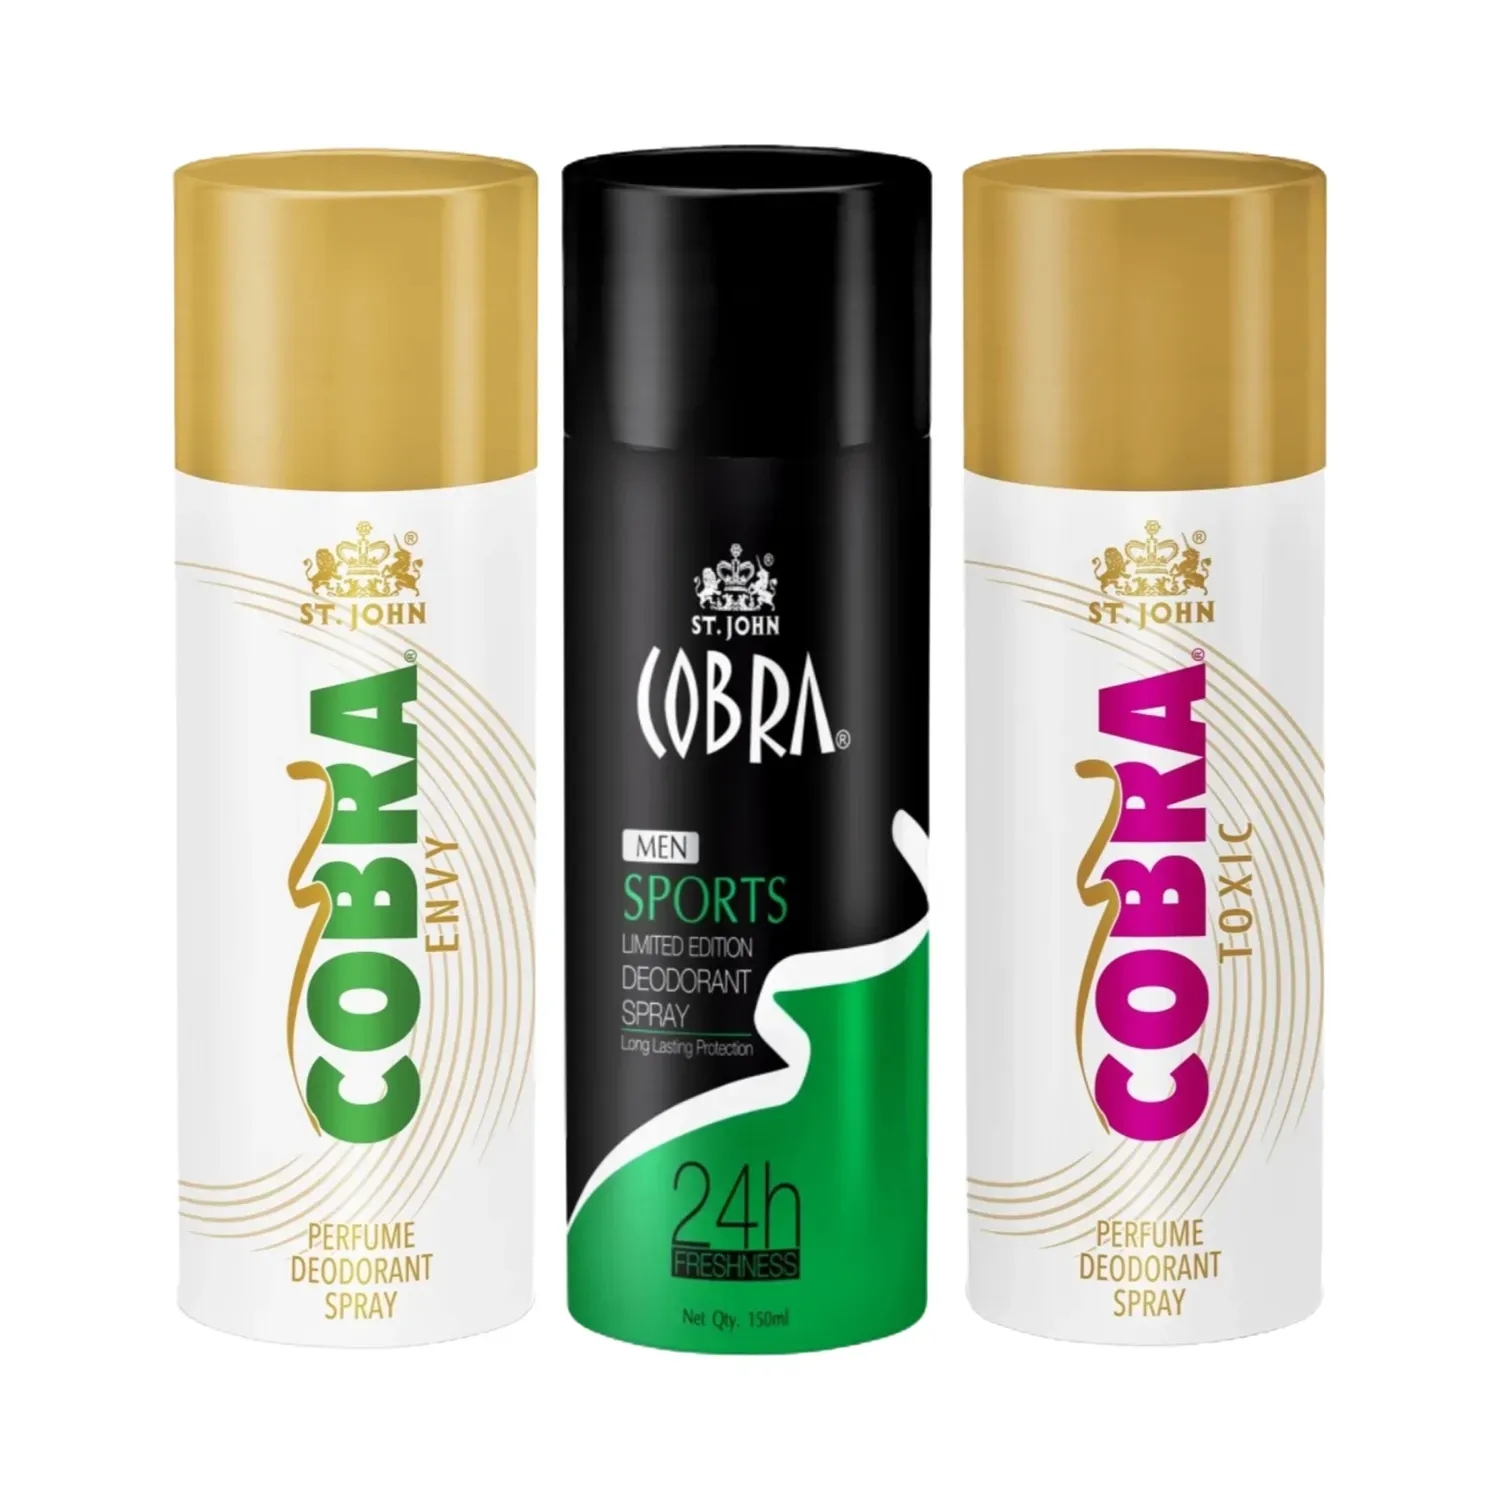 ST.JOHN | ST.JOHN Cobra Sports, Envy & Toxic parfum Deodorant Spray (3 Pcs)